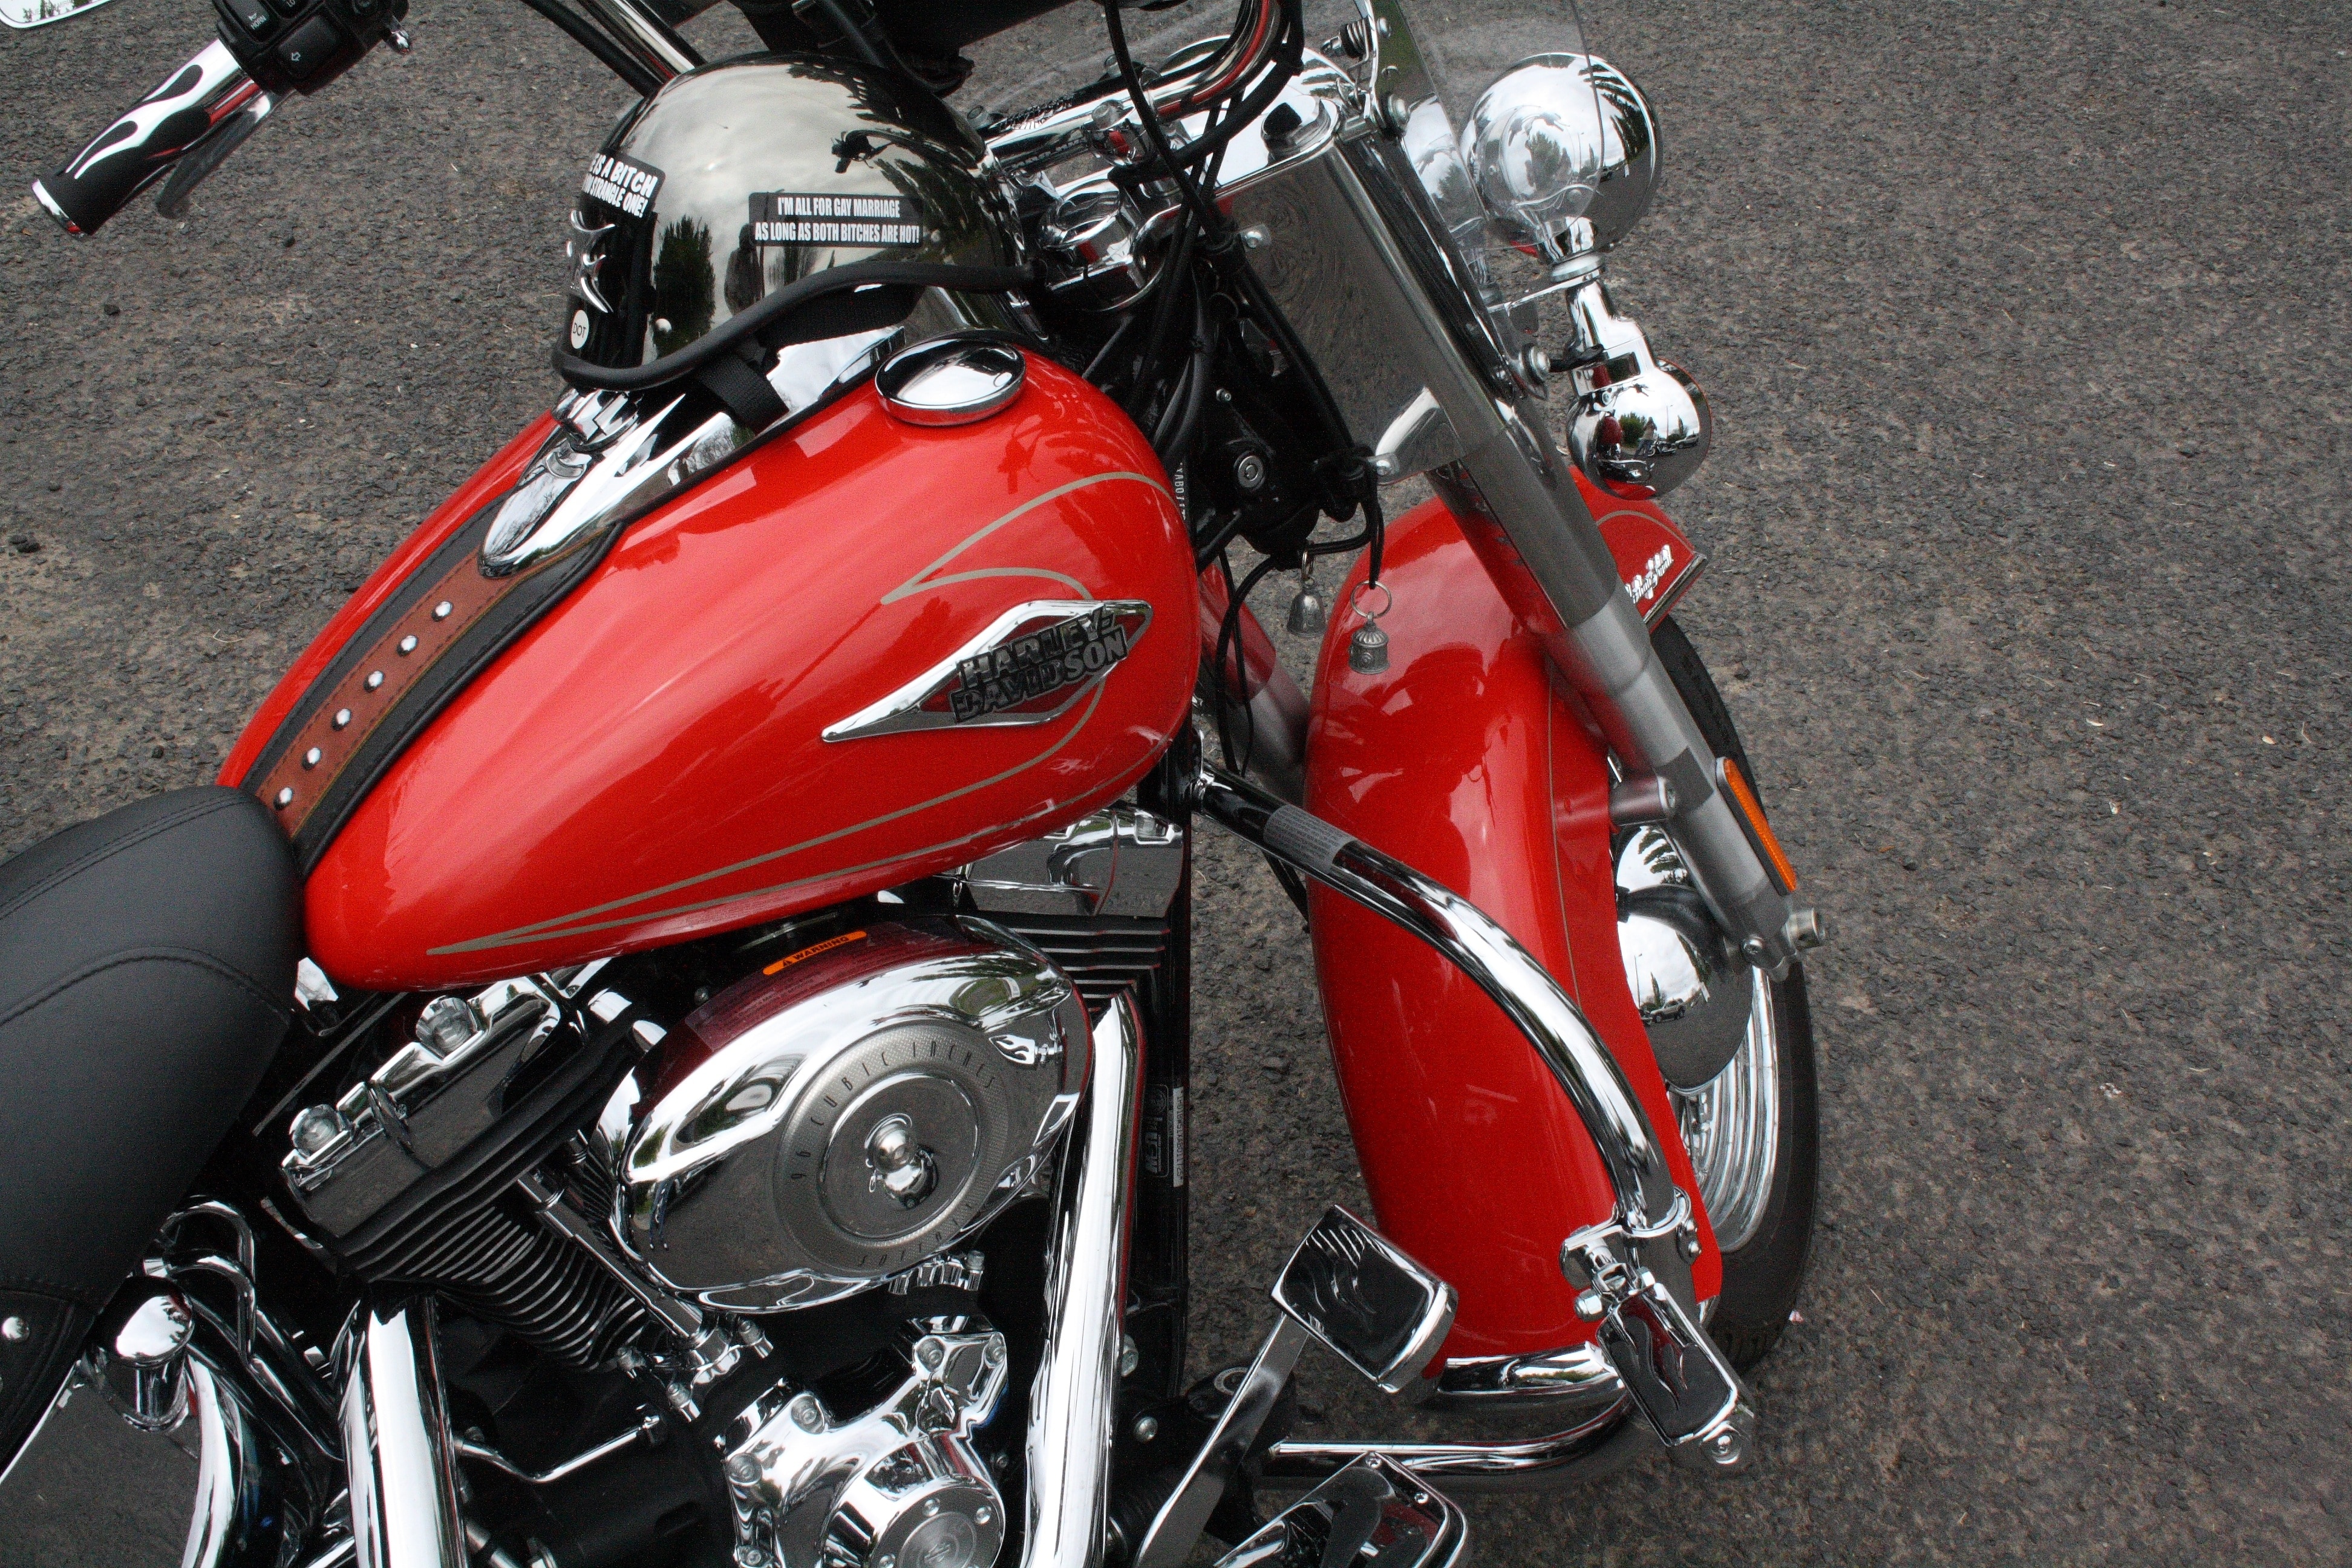 Harley Davidson, Usa, Motorcycle, motorcycle, motorcycle racing